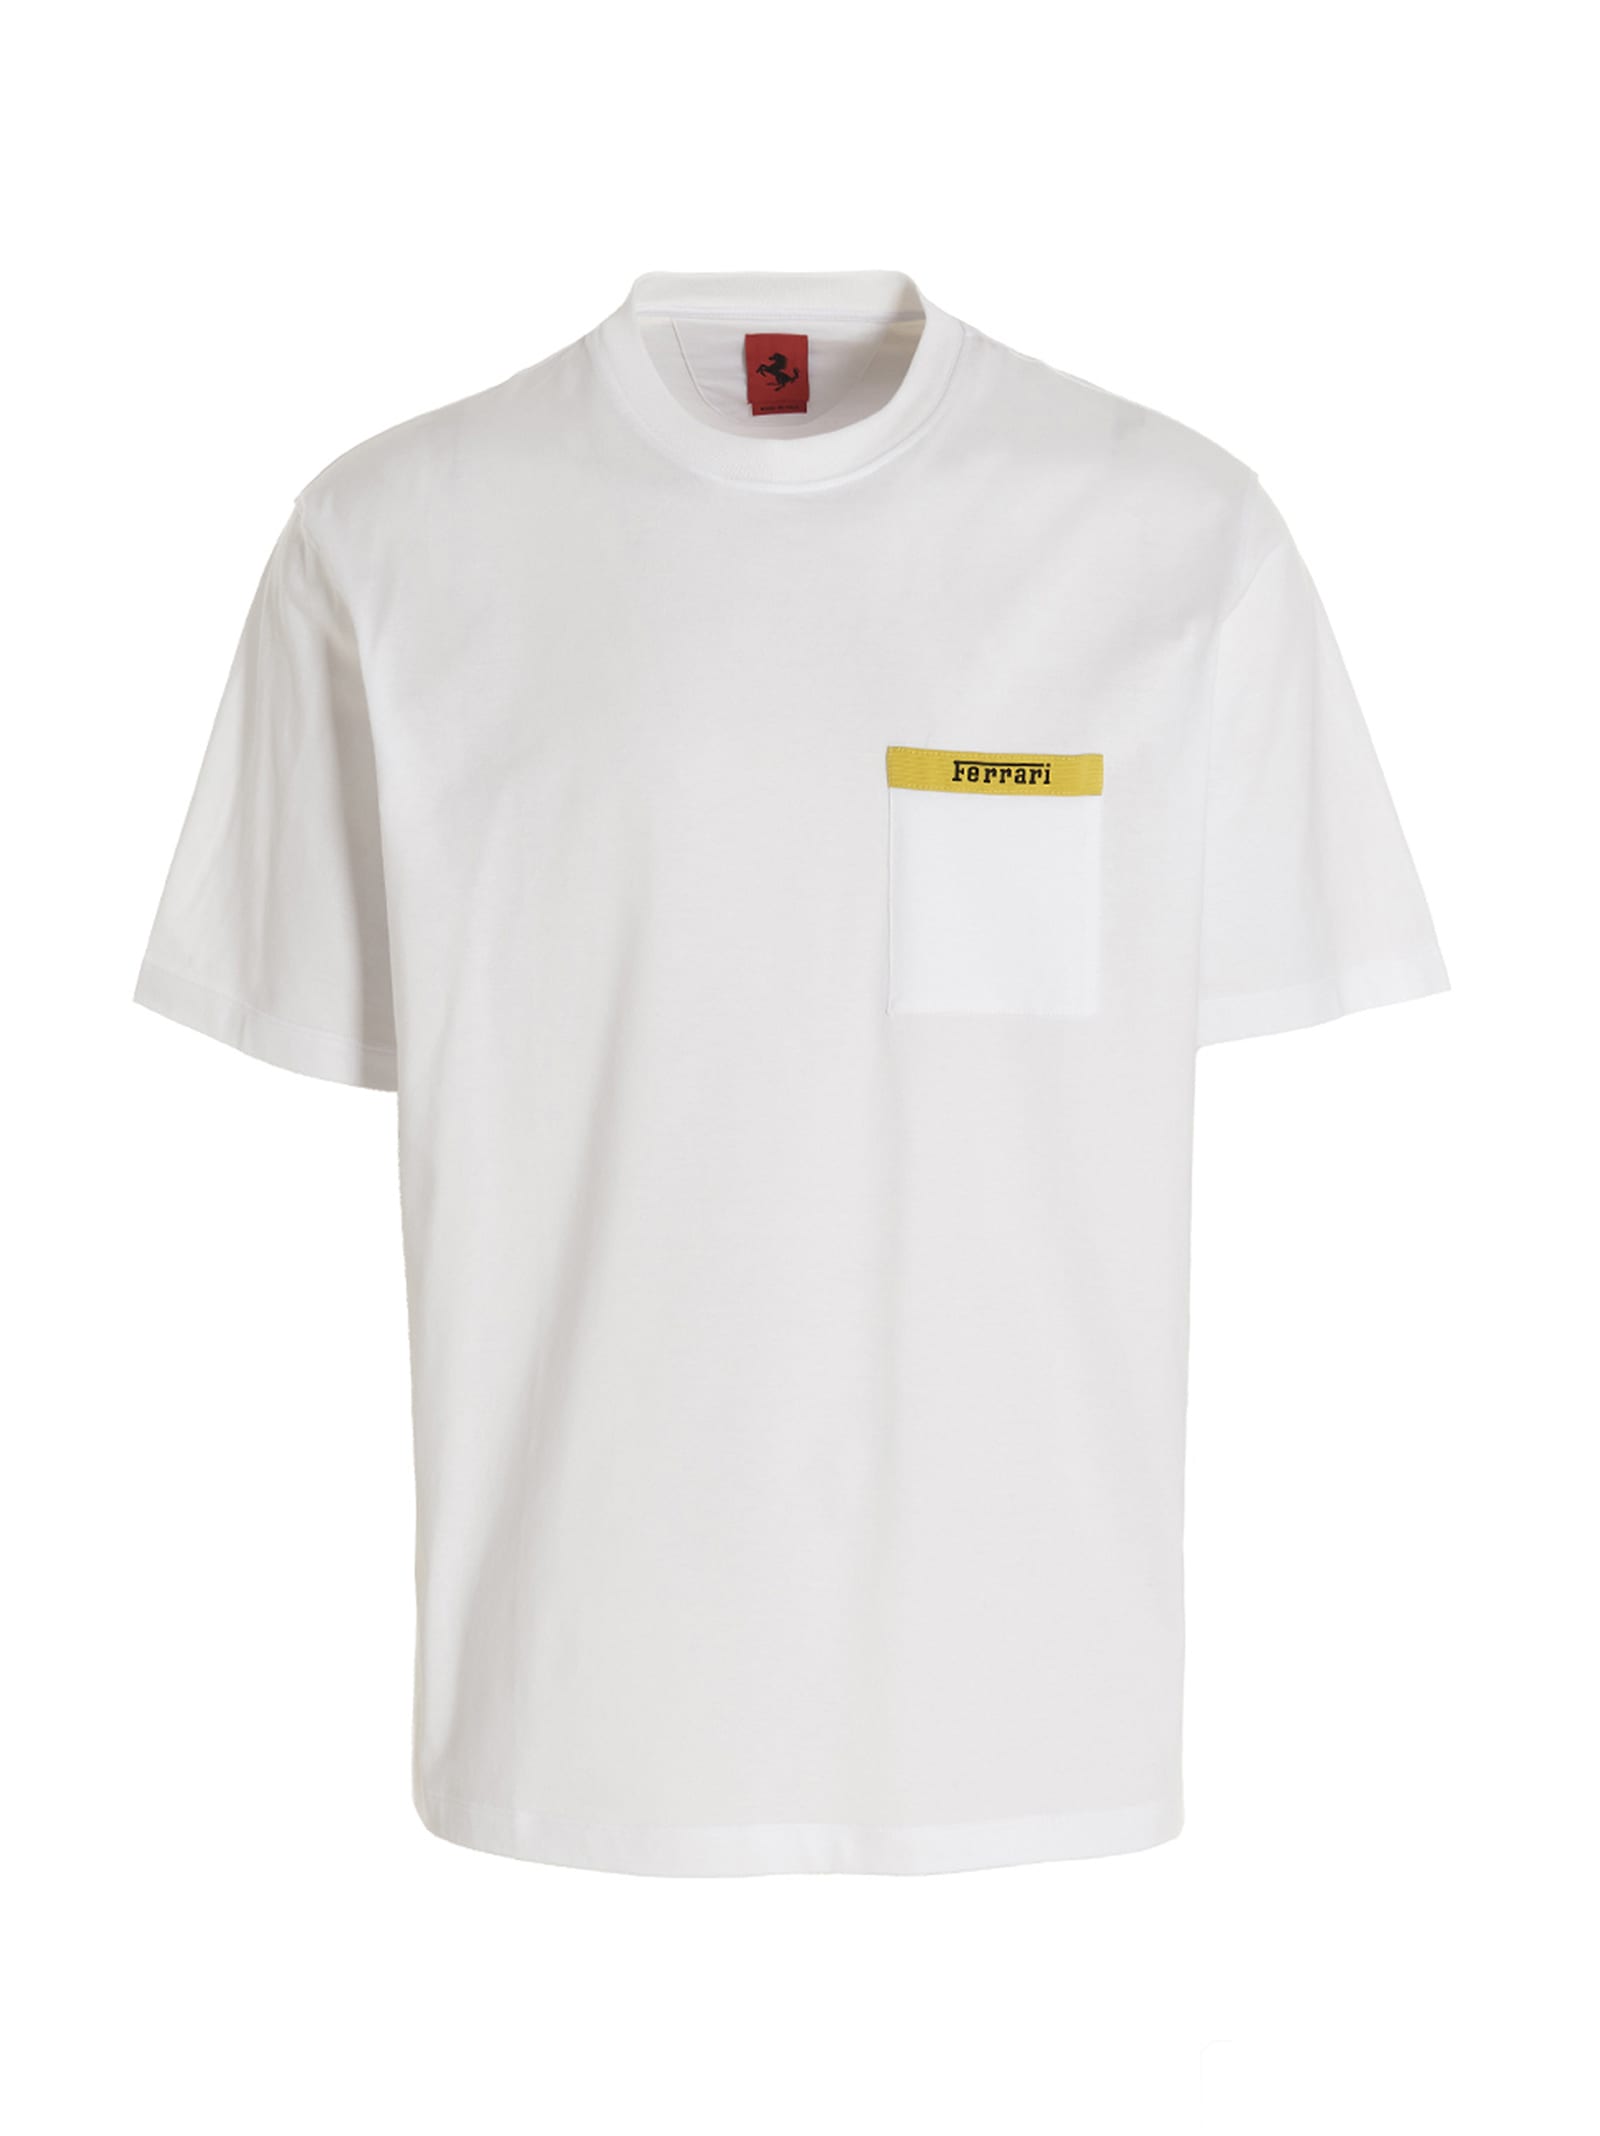 Ferrari pocket T-shirt